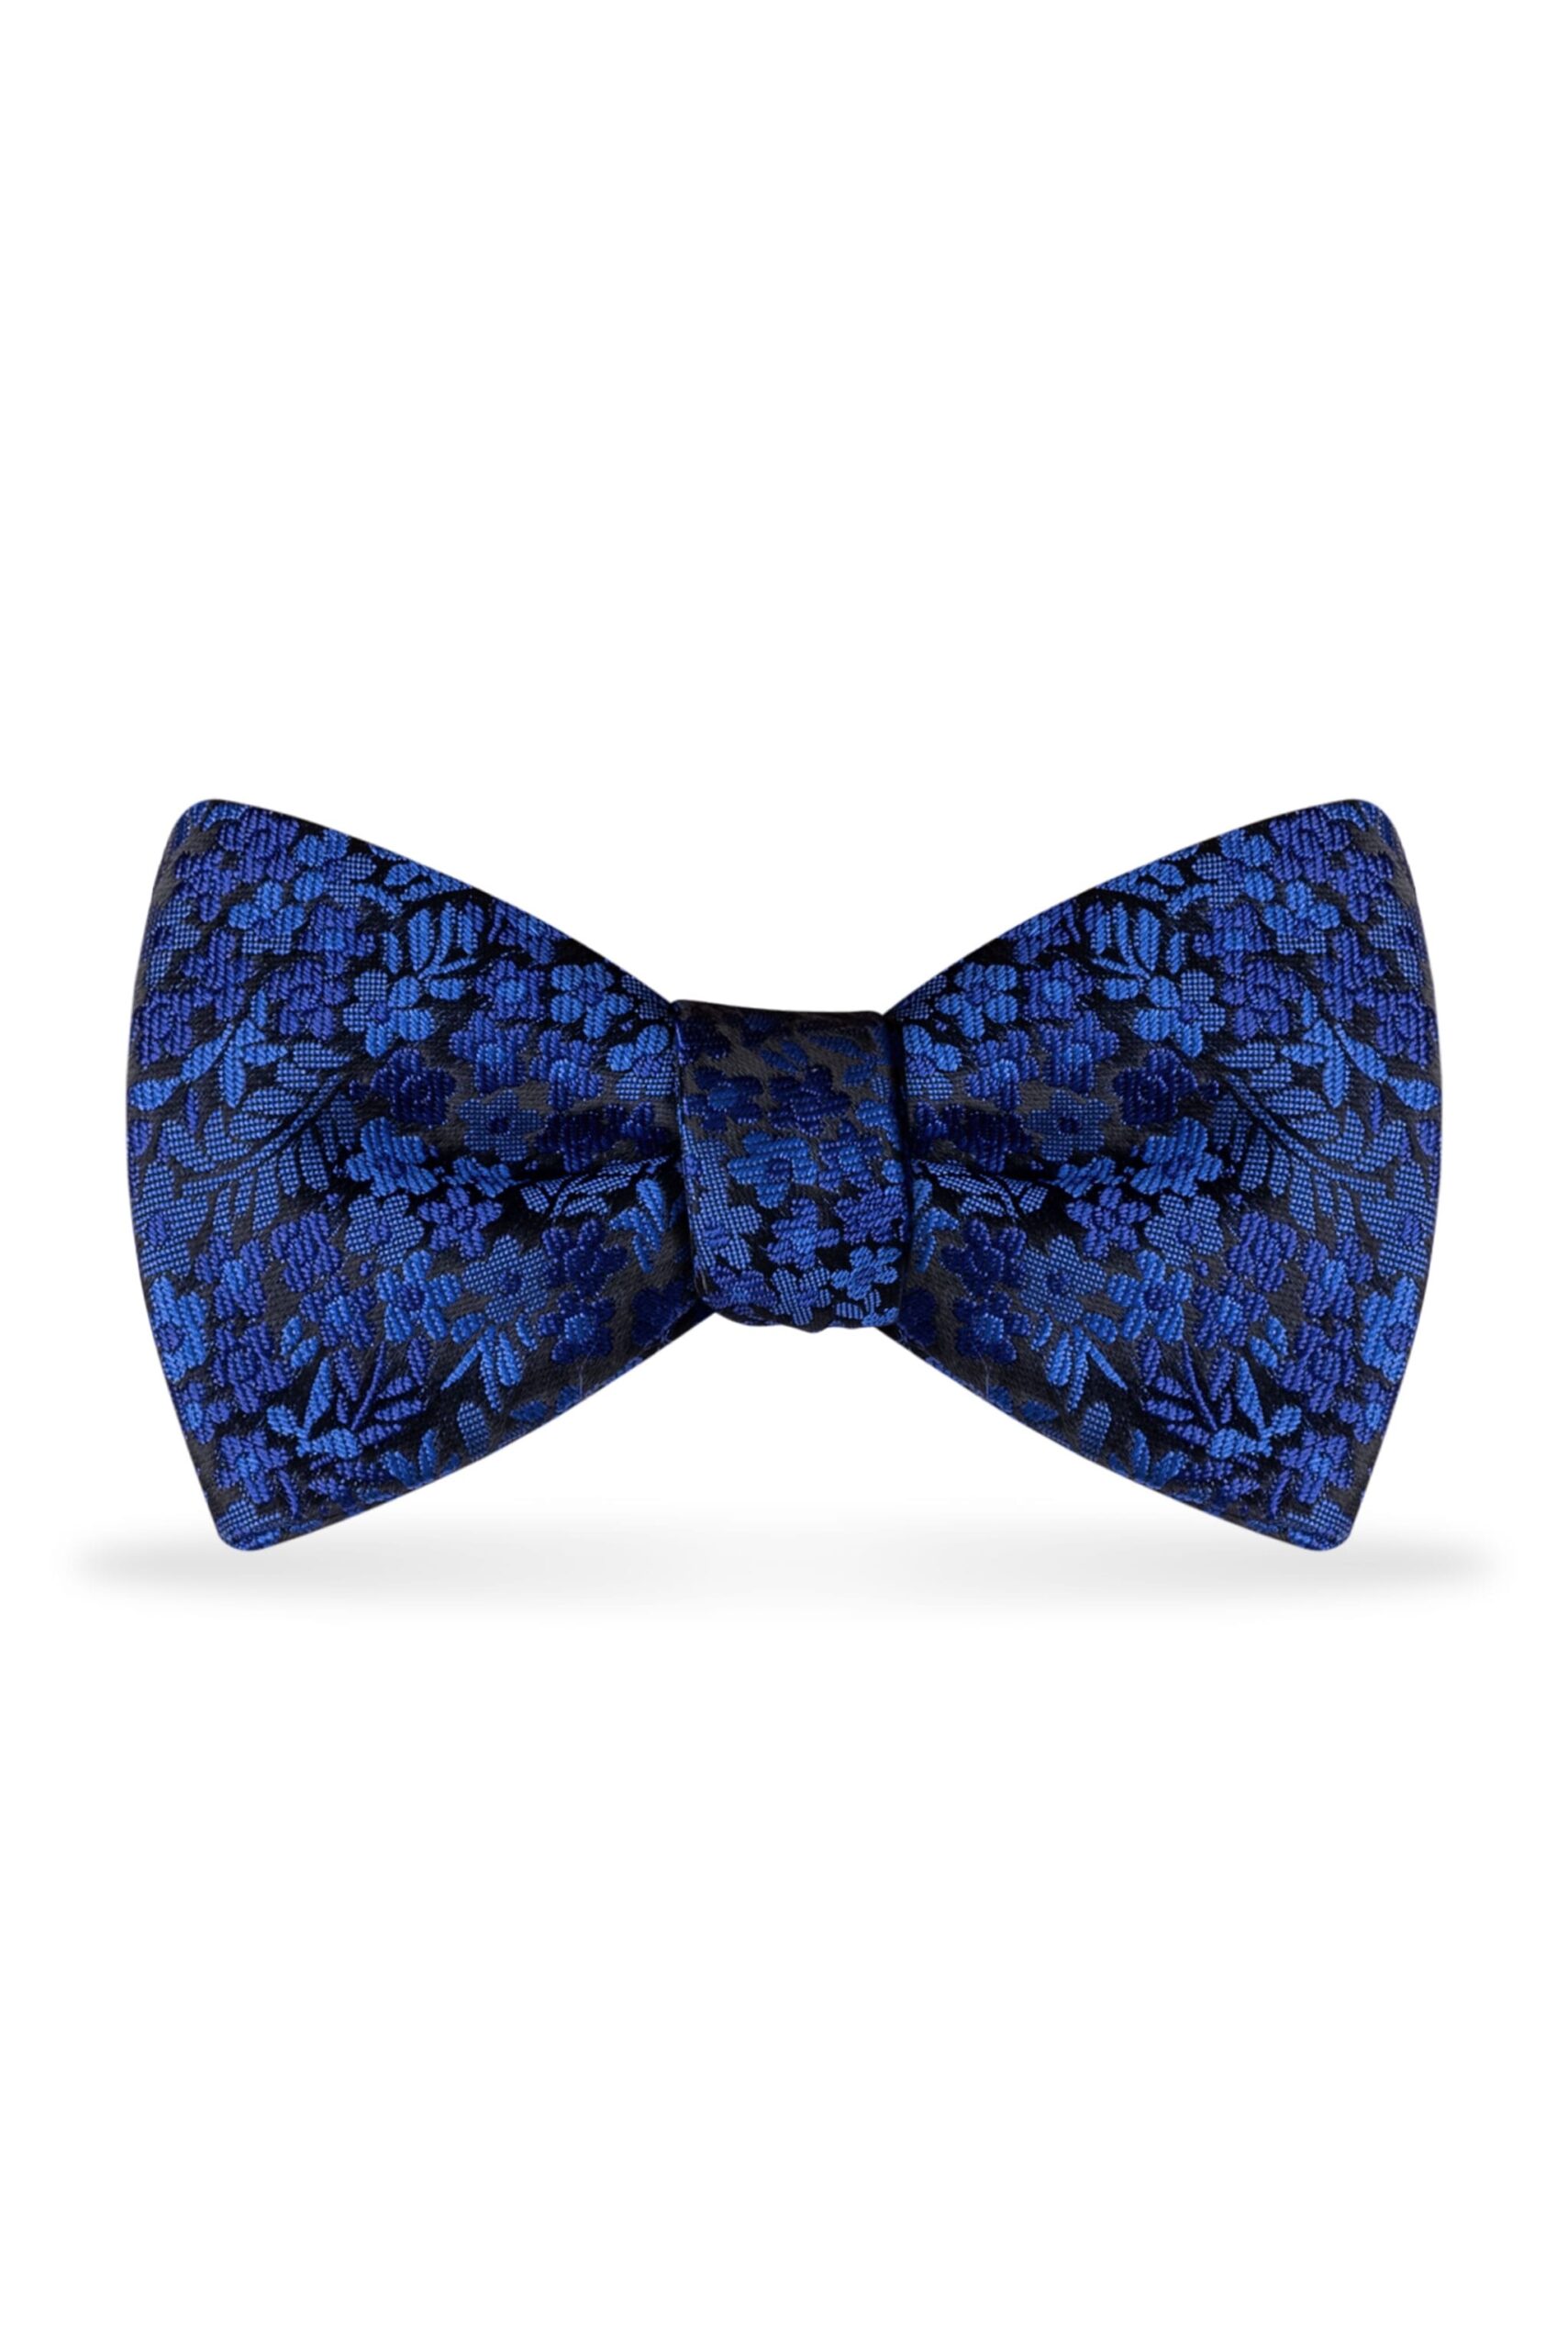 Floral Royal Blue Bow Tie 1